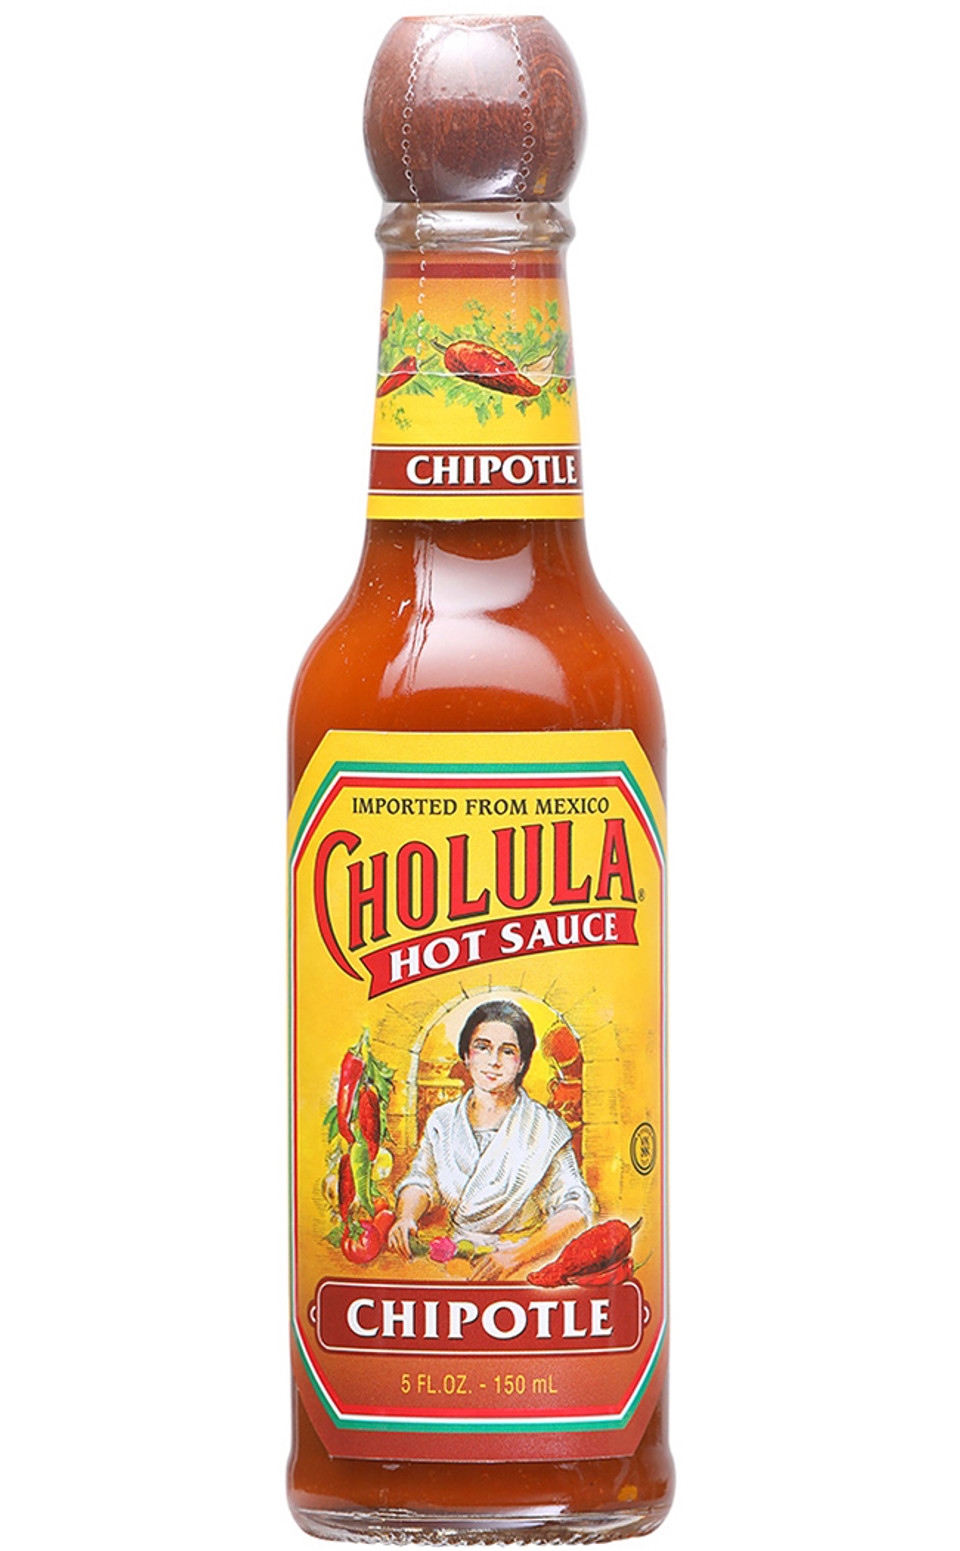 Cholula Chipotle Hot Sauce